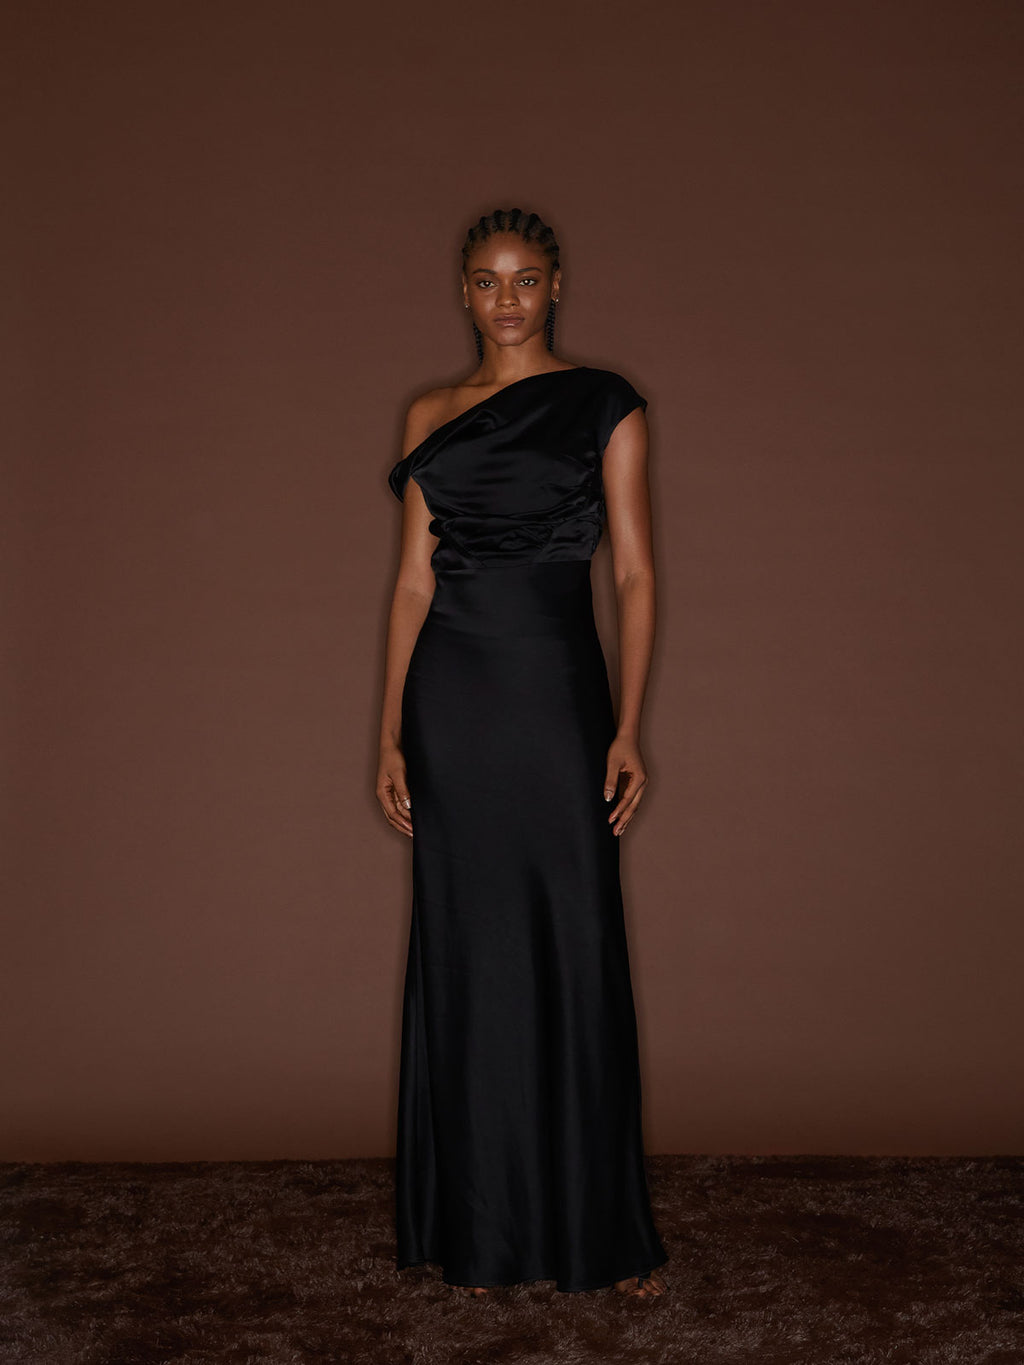 A female figure wearing the Black 09 Davie Dress